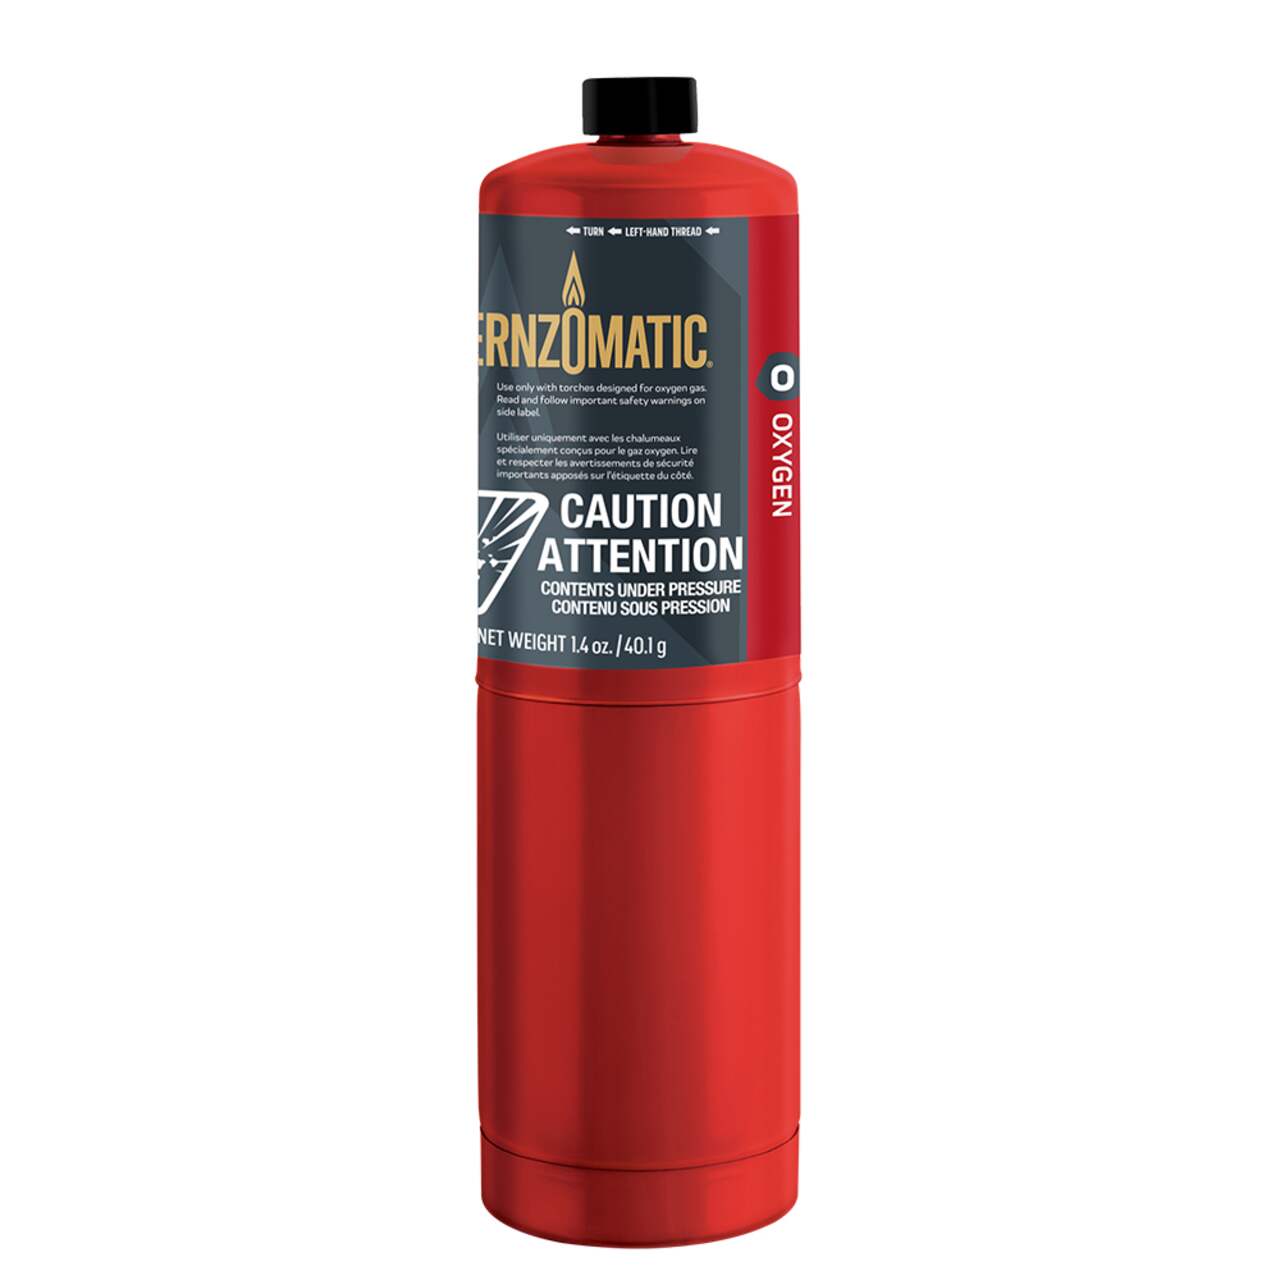 Bernzomatic, 14.1 oz. Propane Hand Torch Cylinder